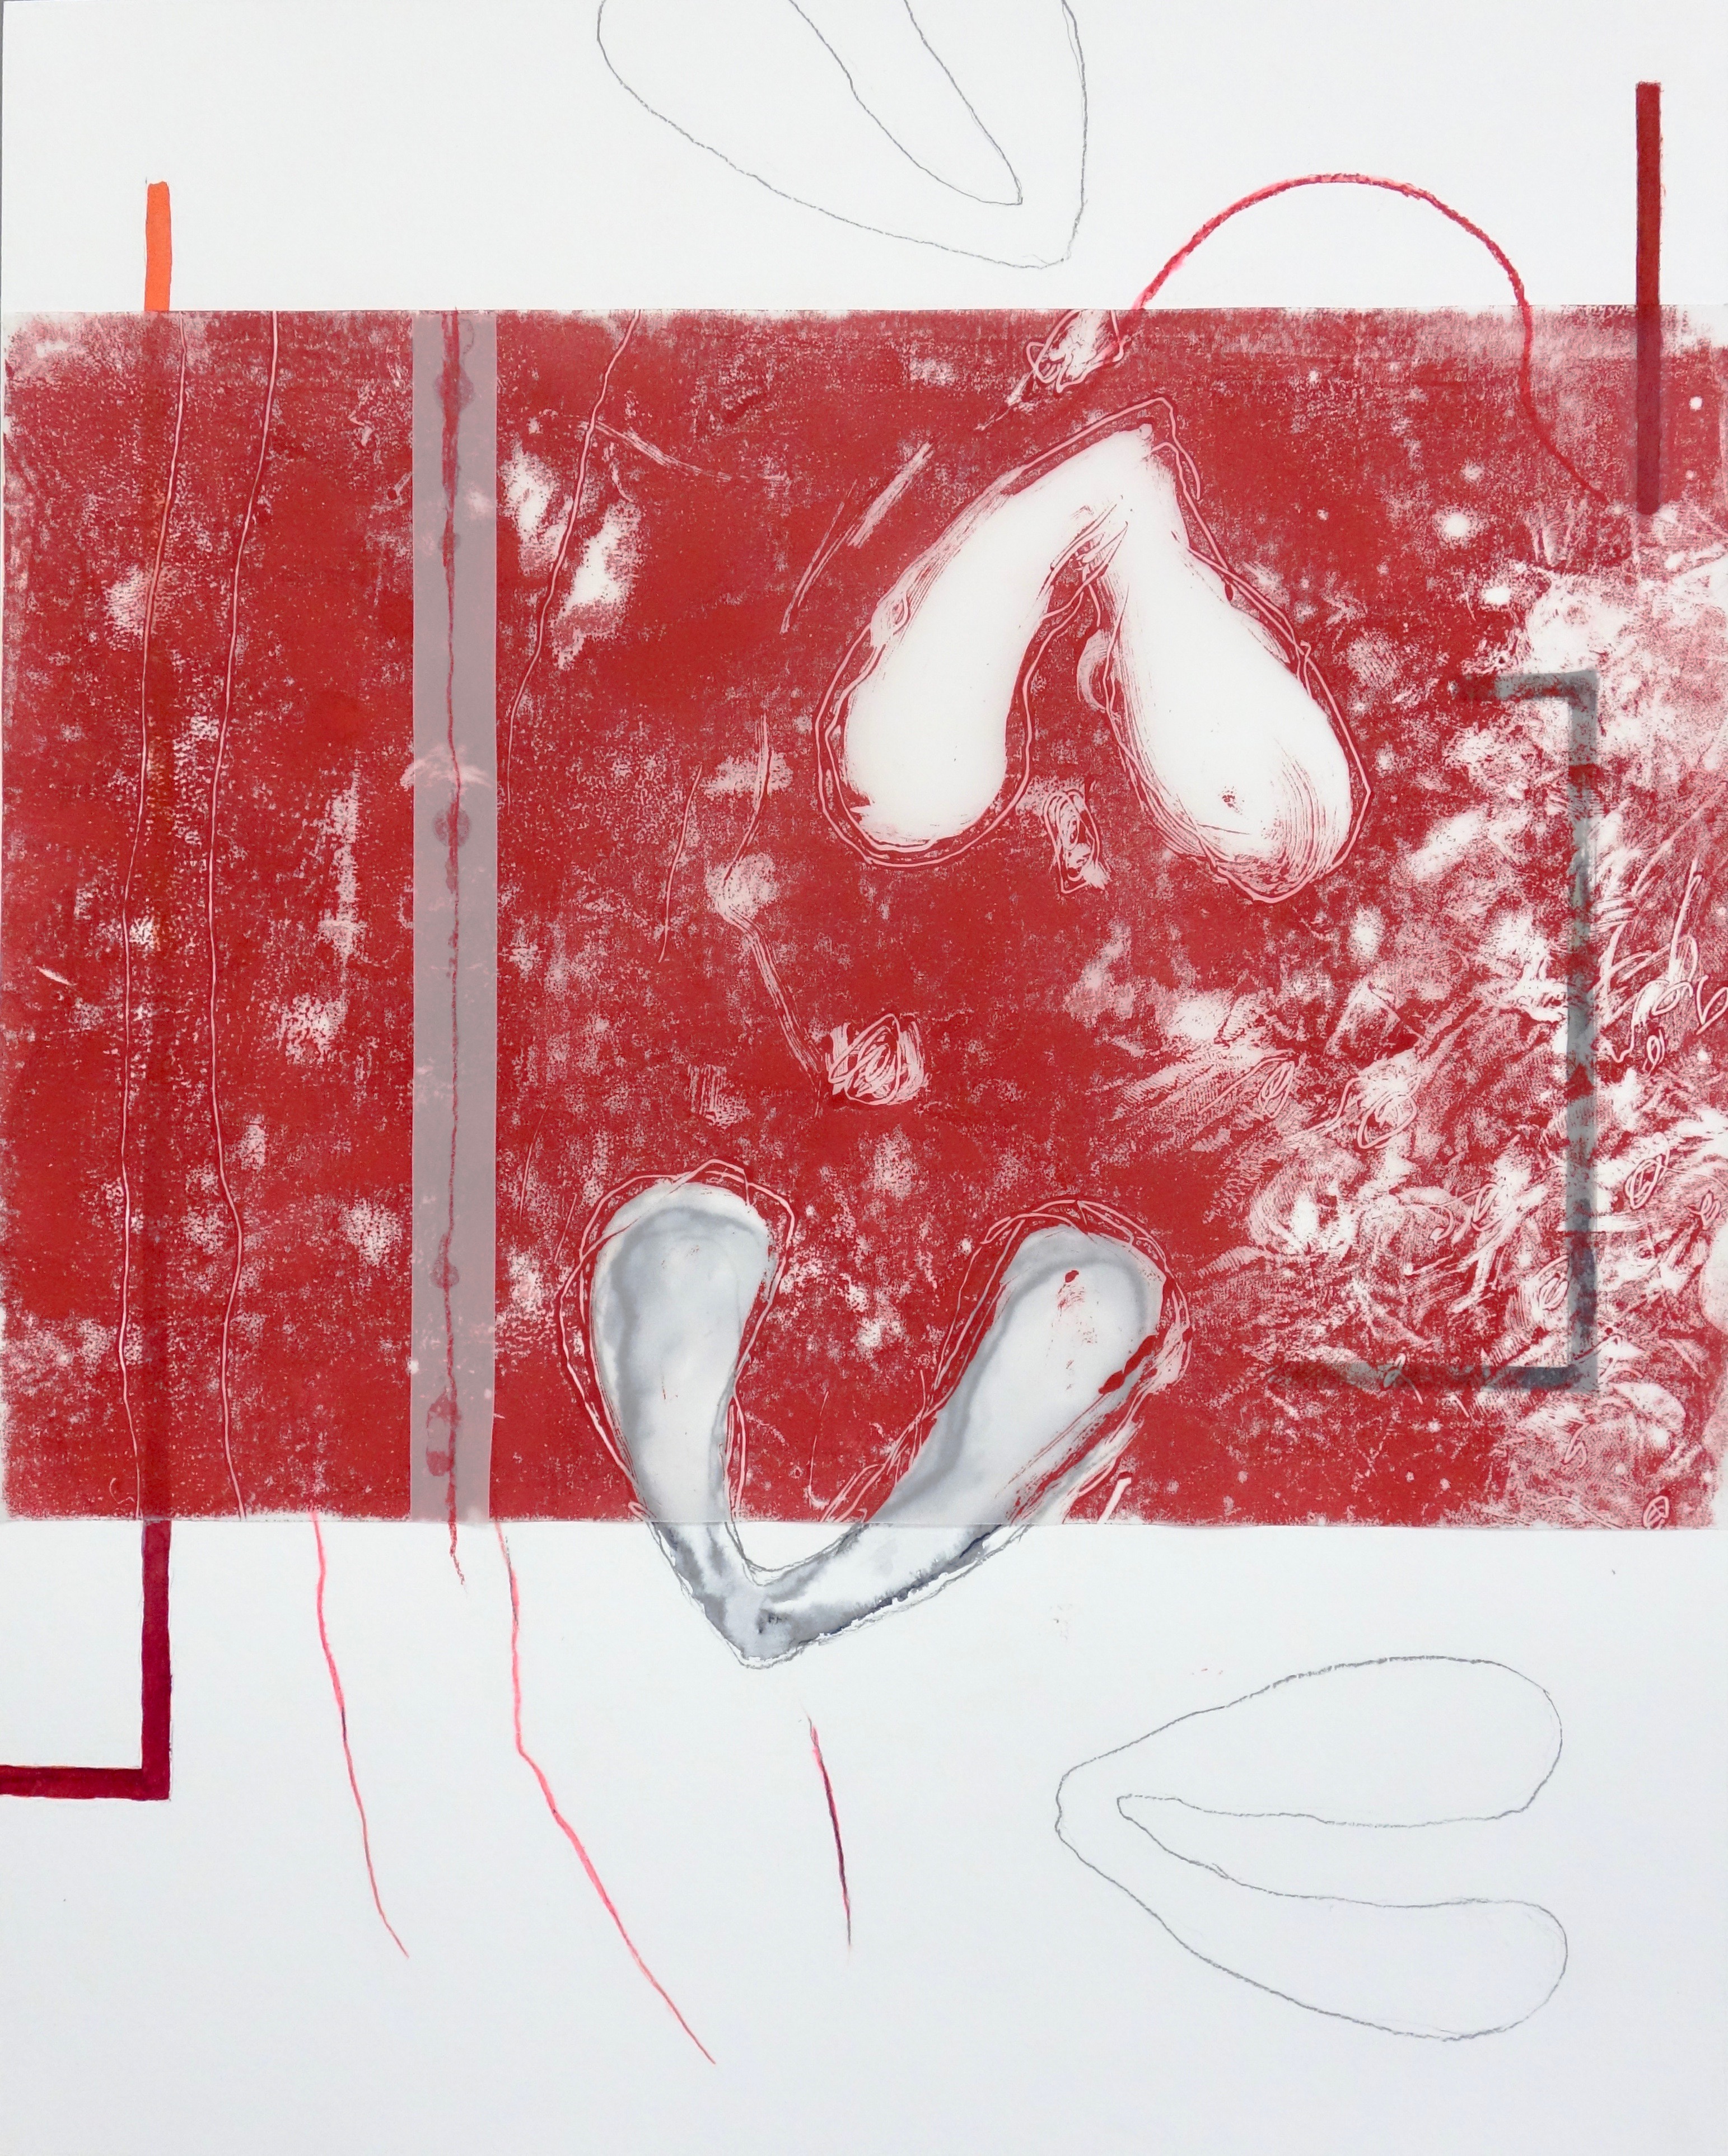 Block Painting 8, Versch. Materialien auf Papier und Transparentpapier, 2021, 50 x 40 cm, Erwin Holl